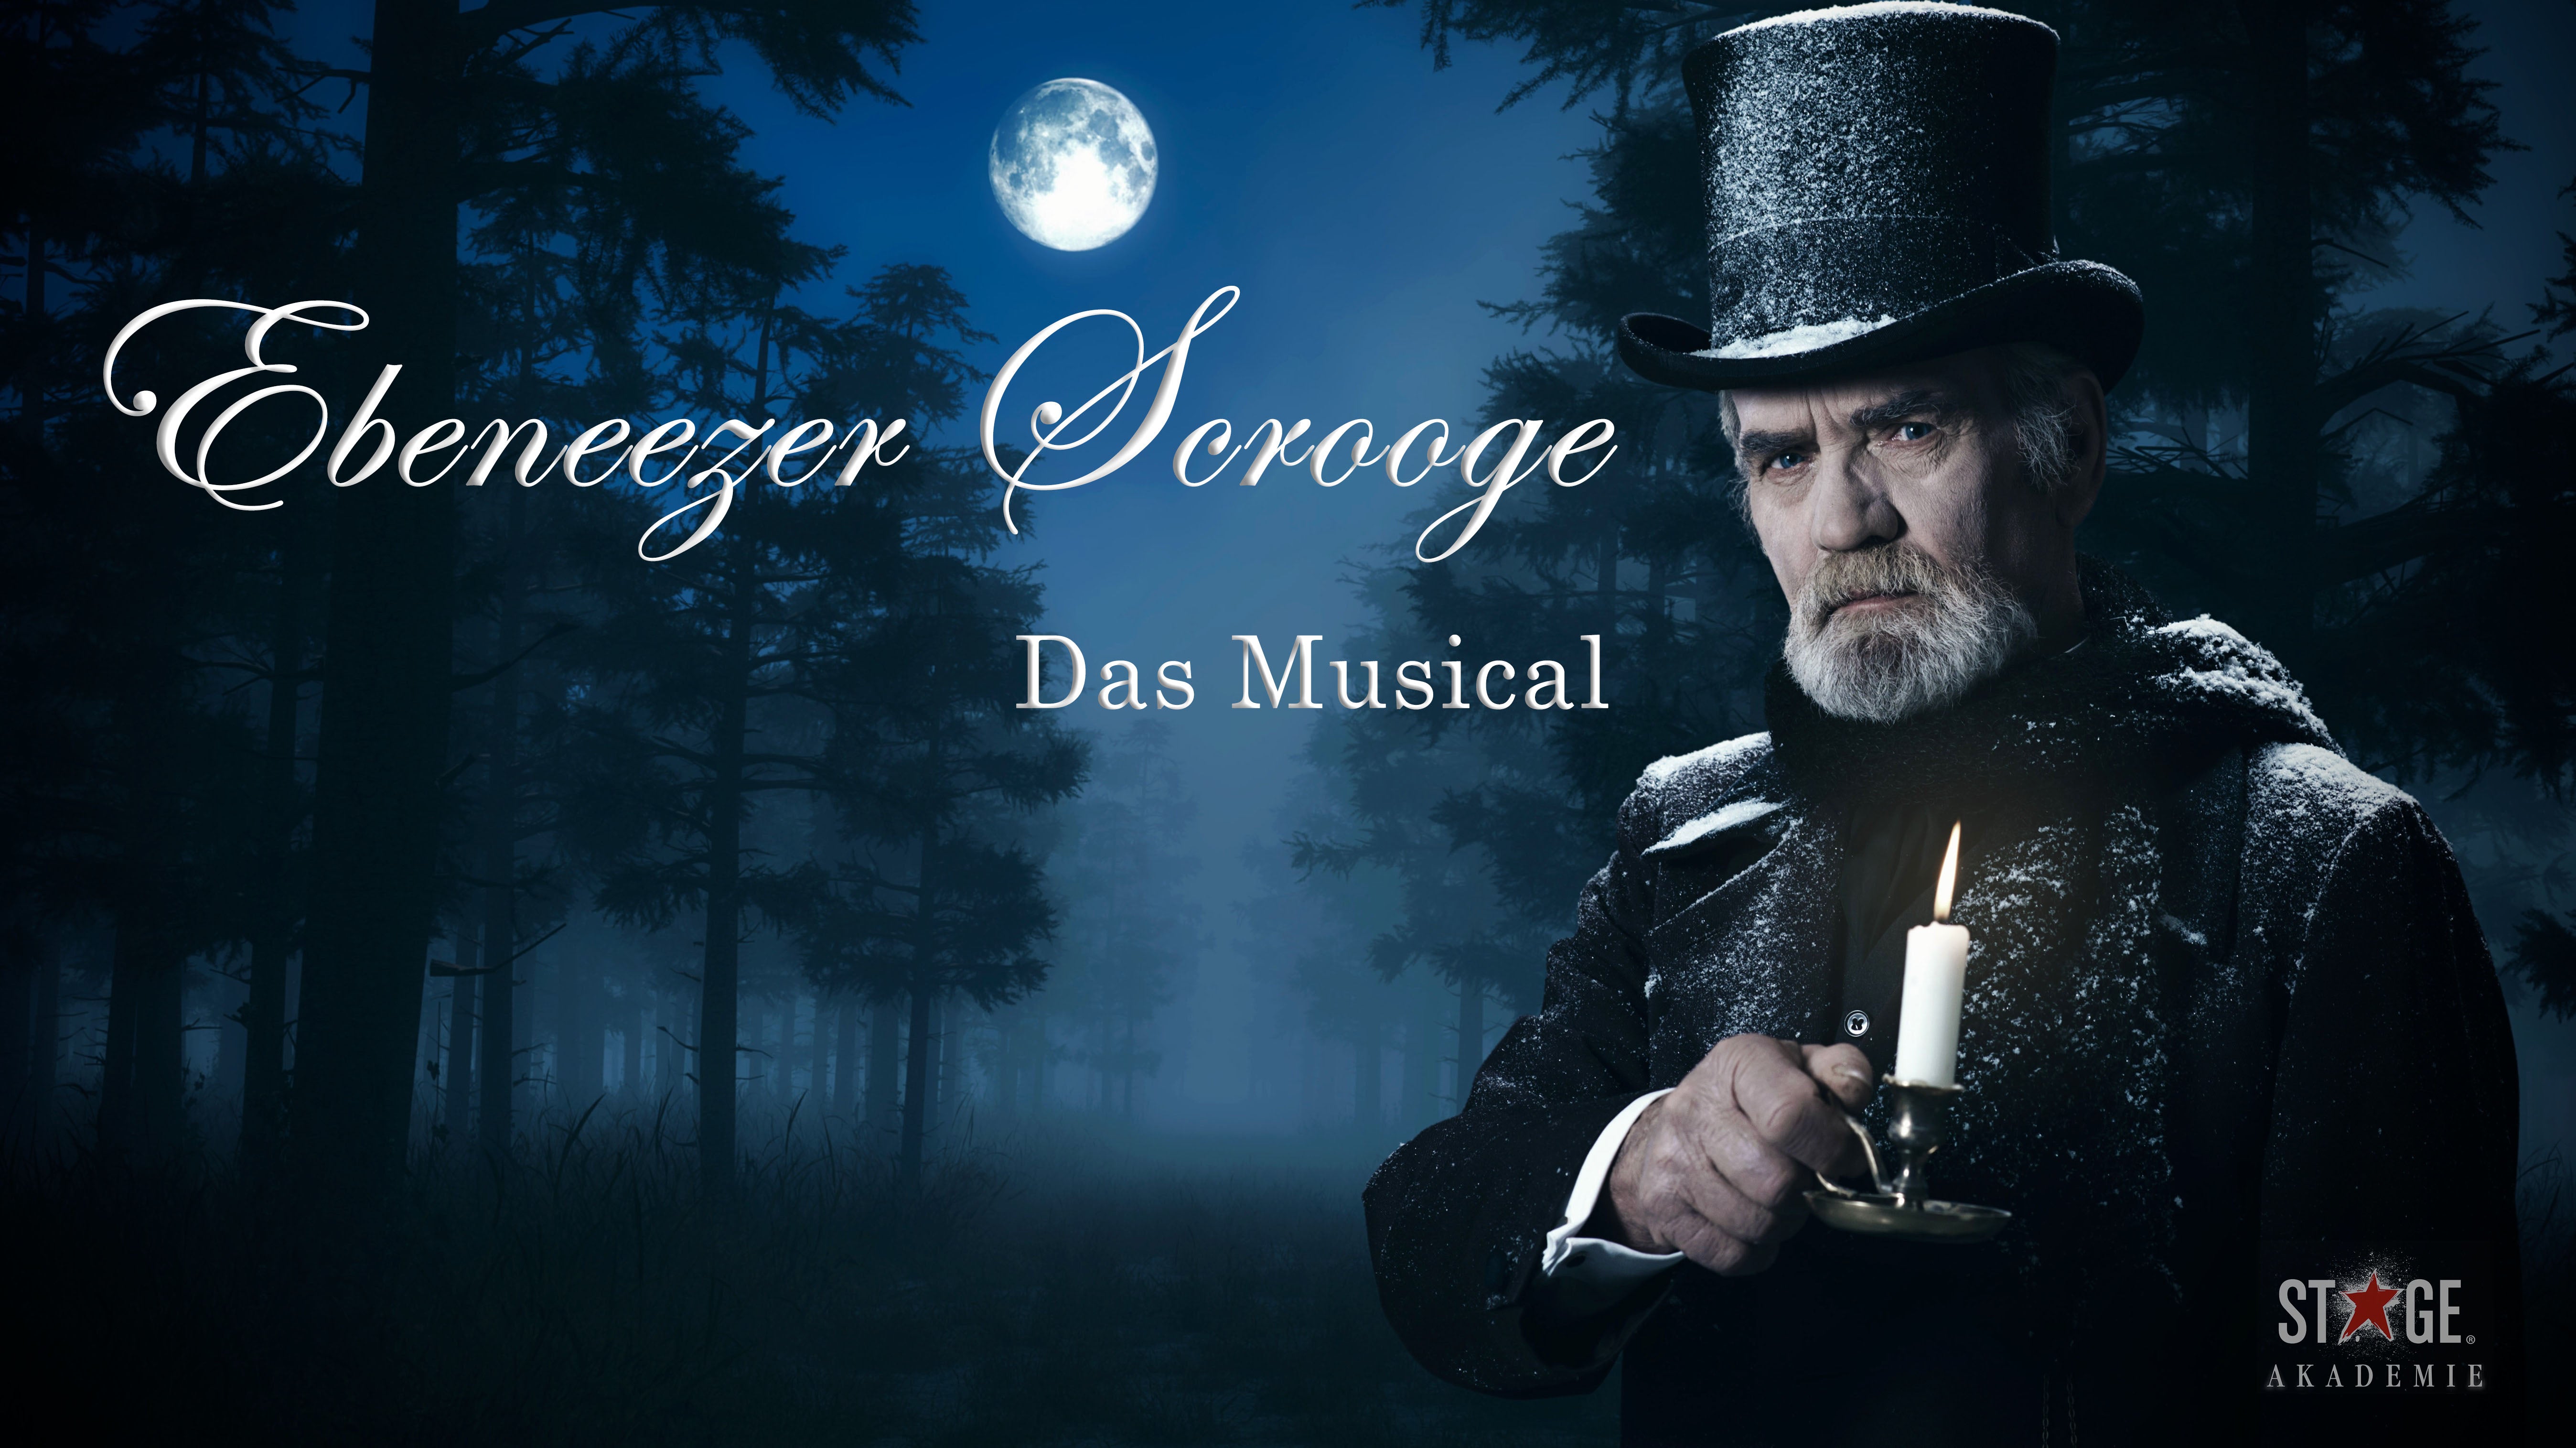 Ebeneezer Scrooge - Das Musical presale information on freepresalepasswords.com